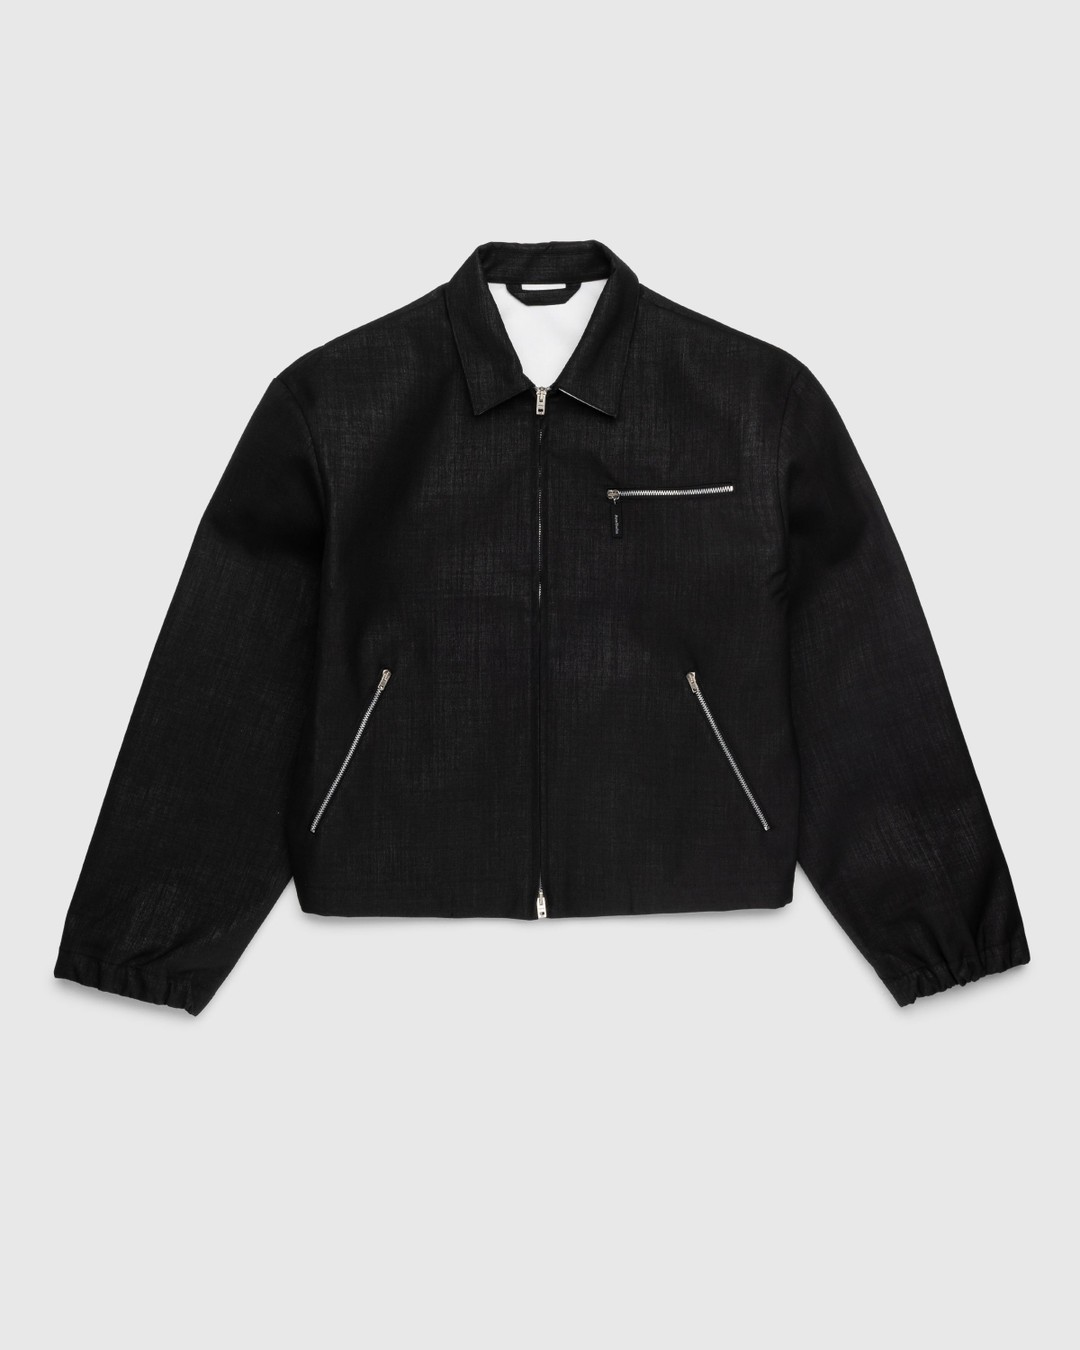 Acne Studios – Zippered Jacket Black - Outerwear - Black - Image 1